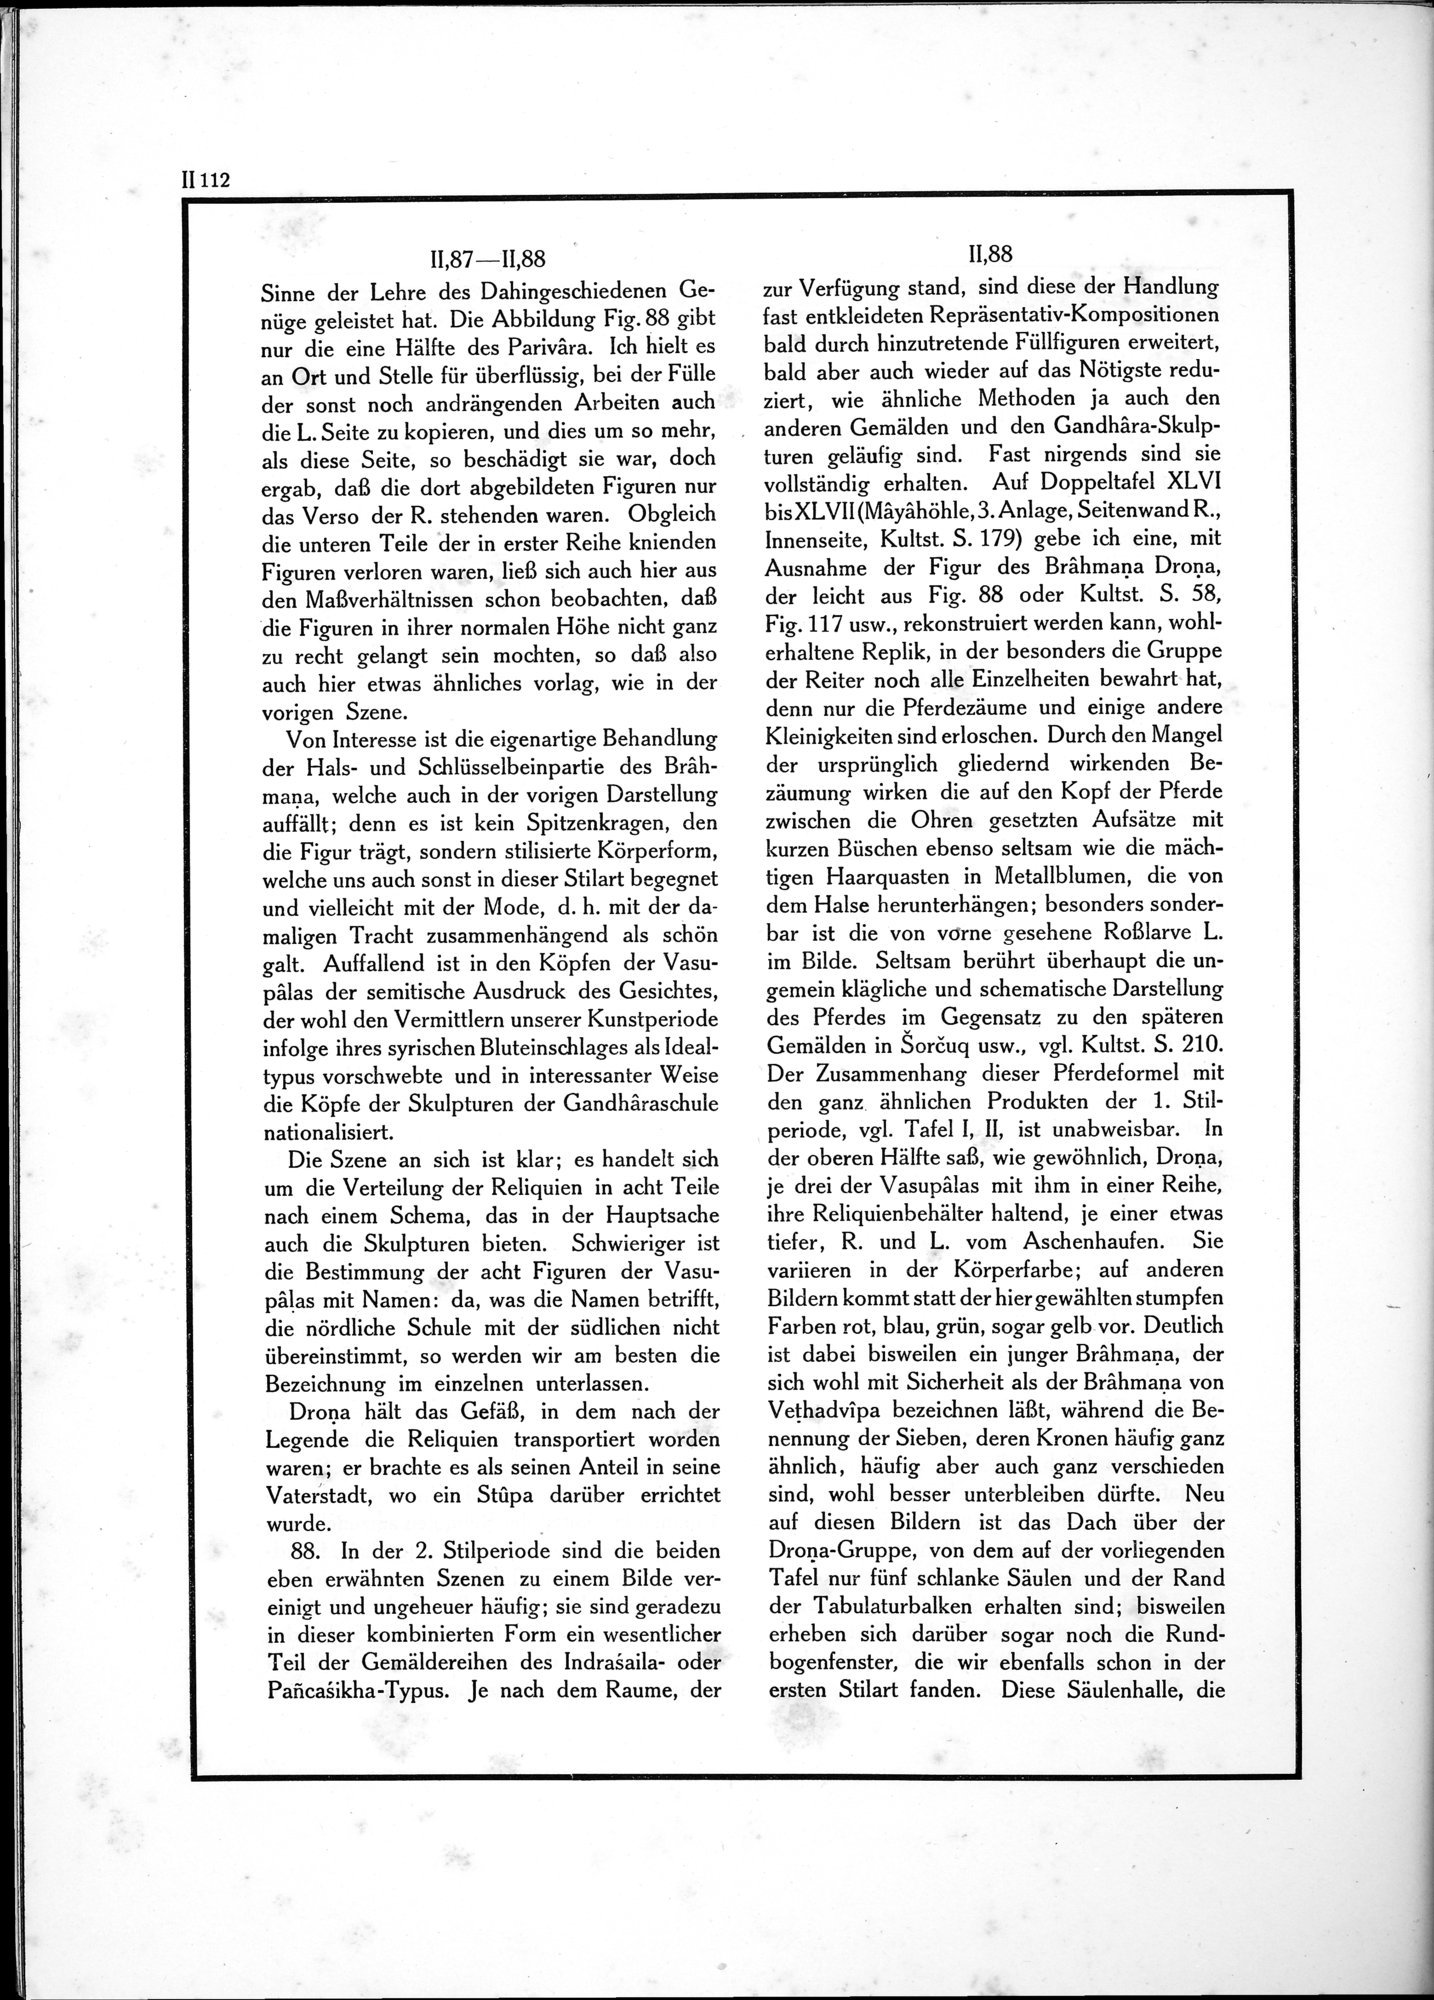 Alt-Kutscha : vol.1 / Page 234 (Grayscale High Resolution Image)